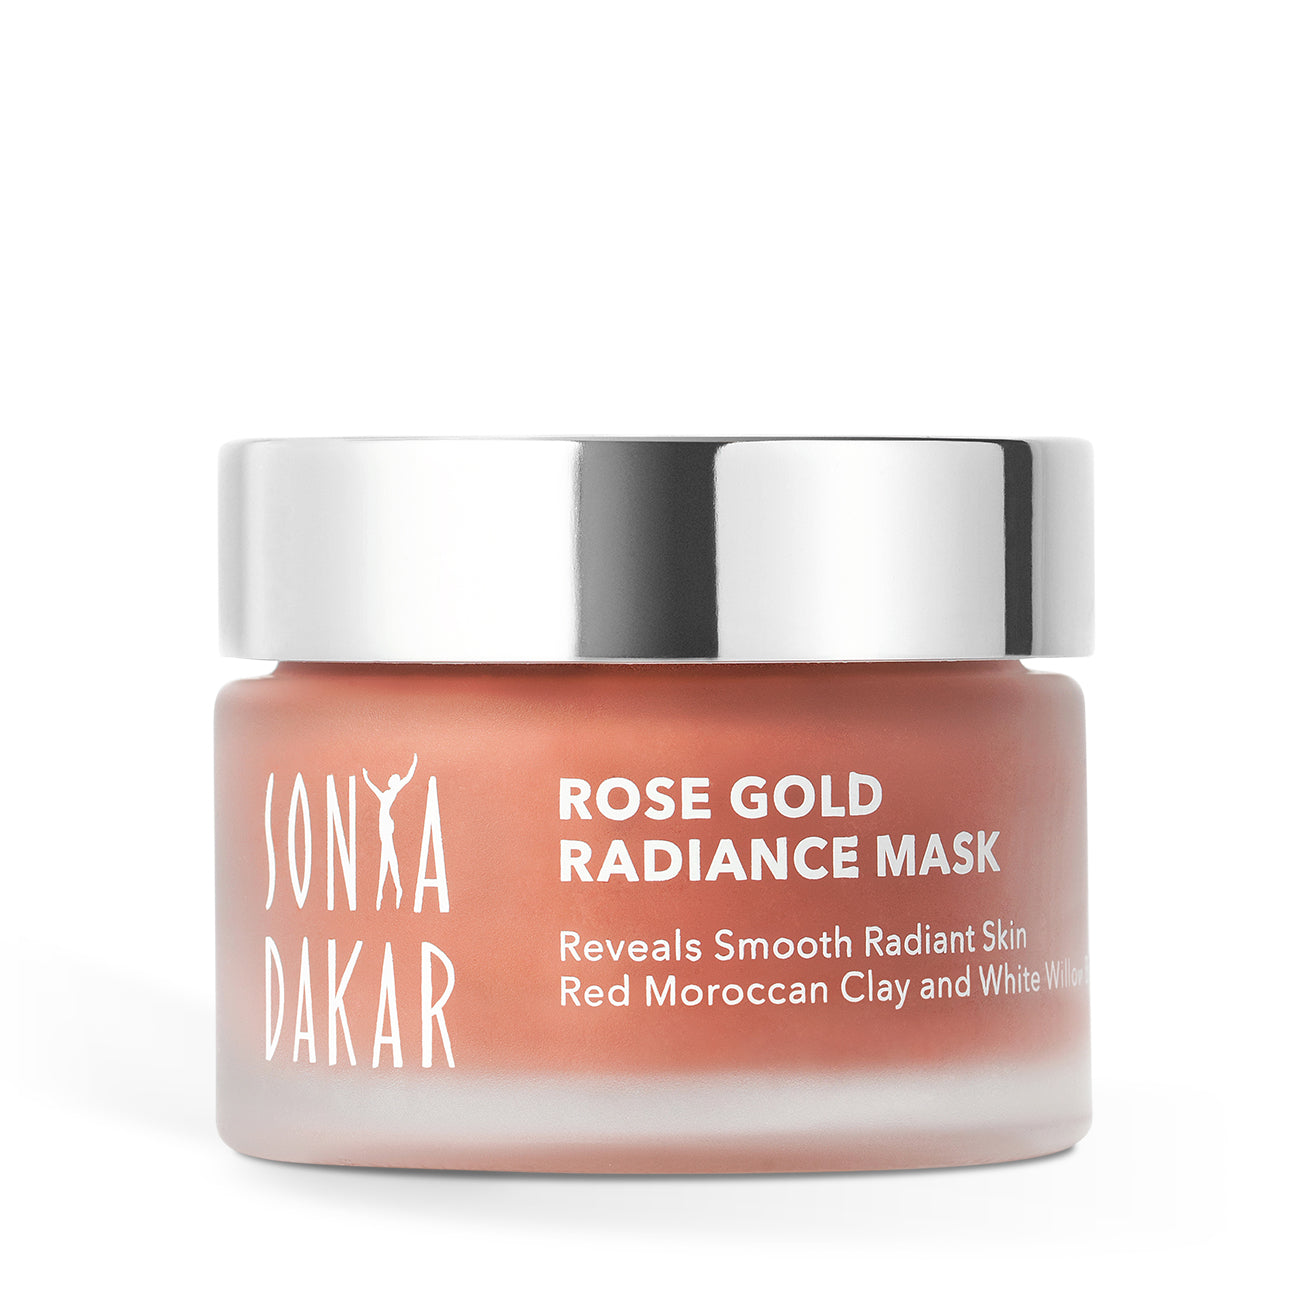 Pore Minimizer Mask - Sonya Dakar Rose Gold Radiance Mask – SONYA